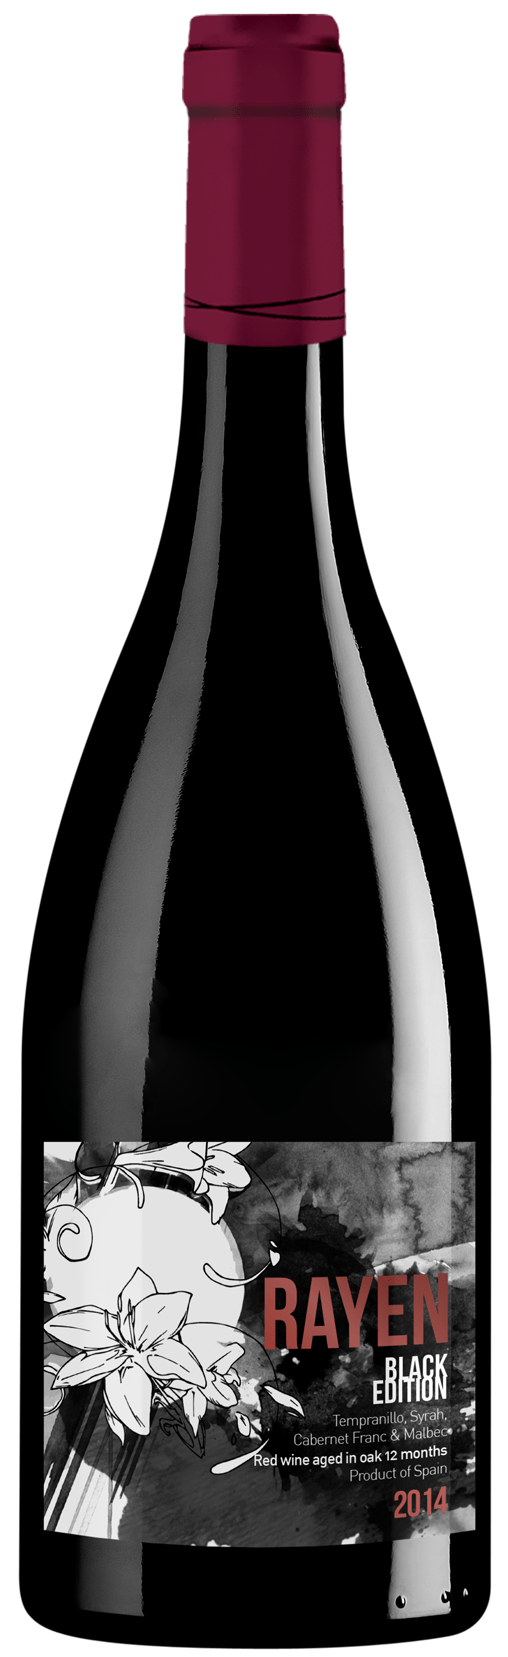 Wine Terramagna Rayen Black Edition